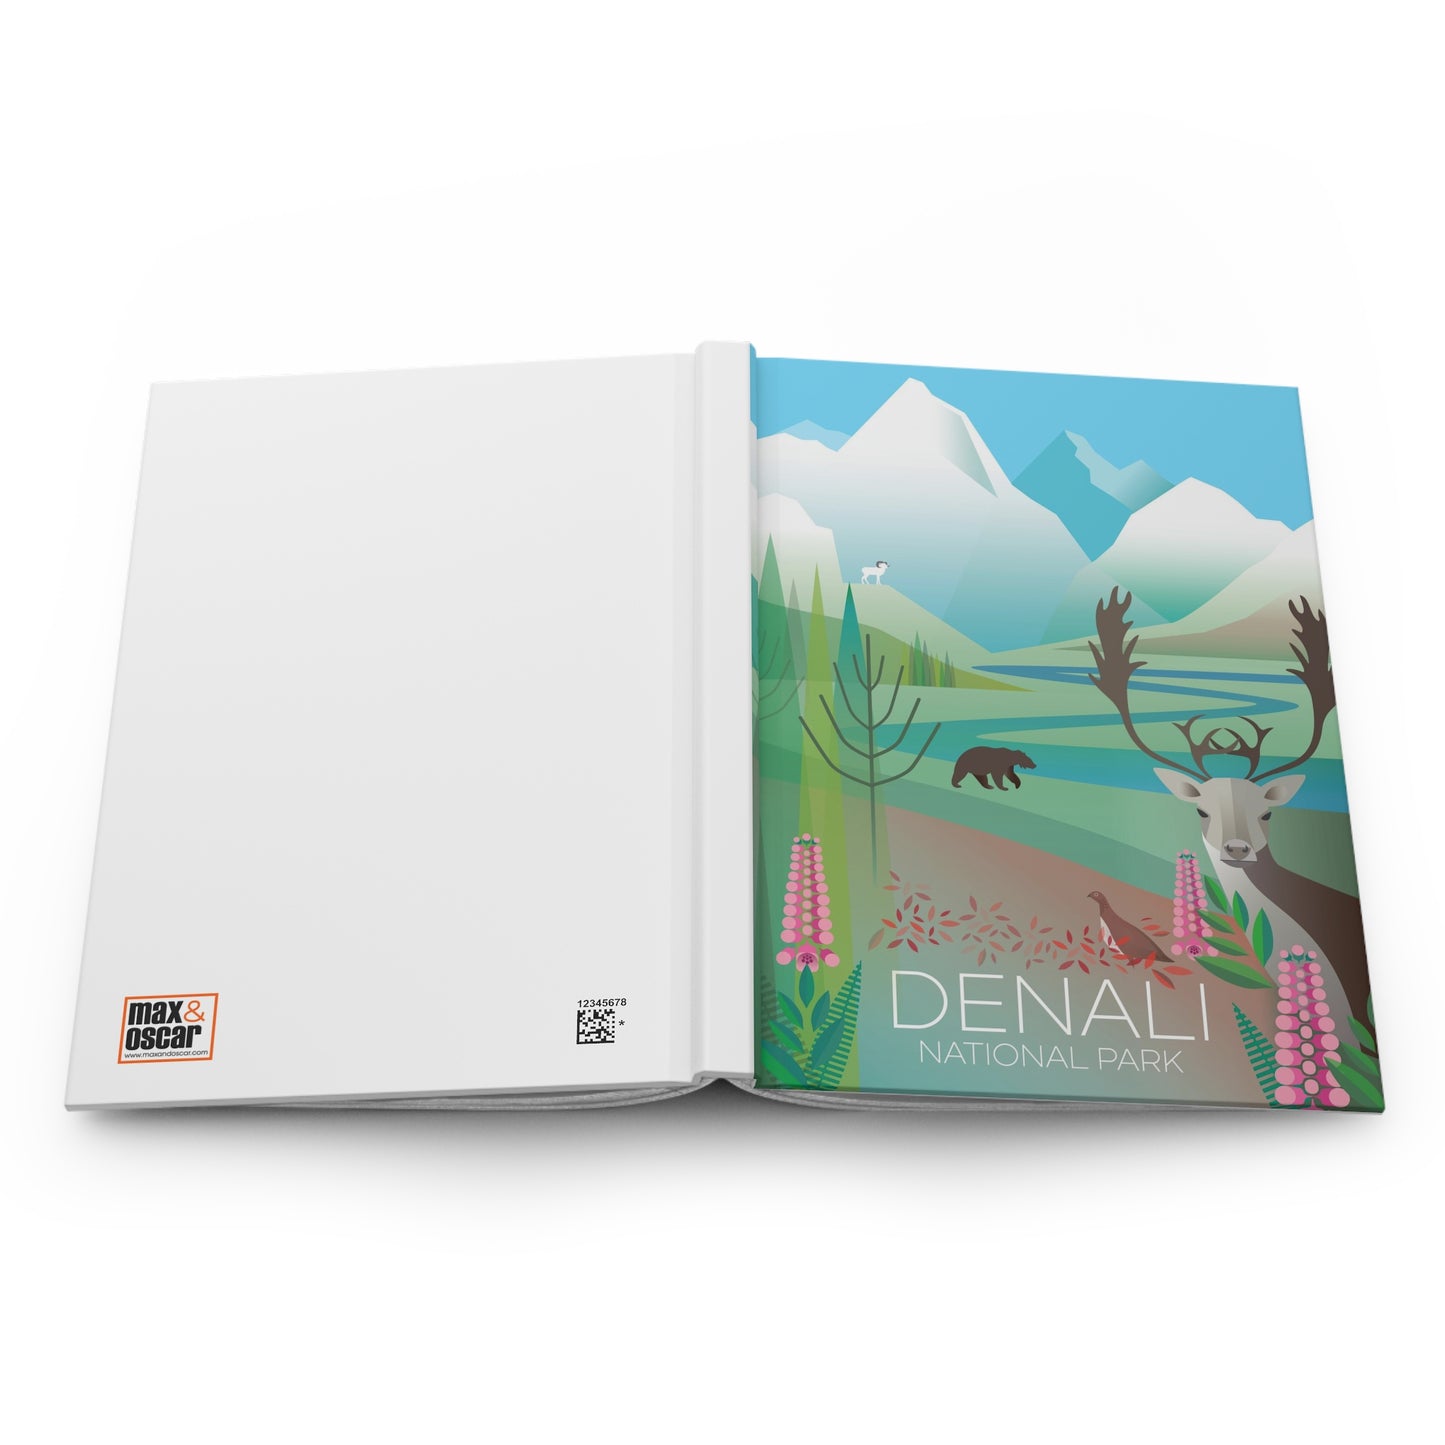 Denali National Park Hardcover Journal